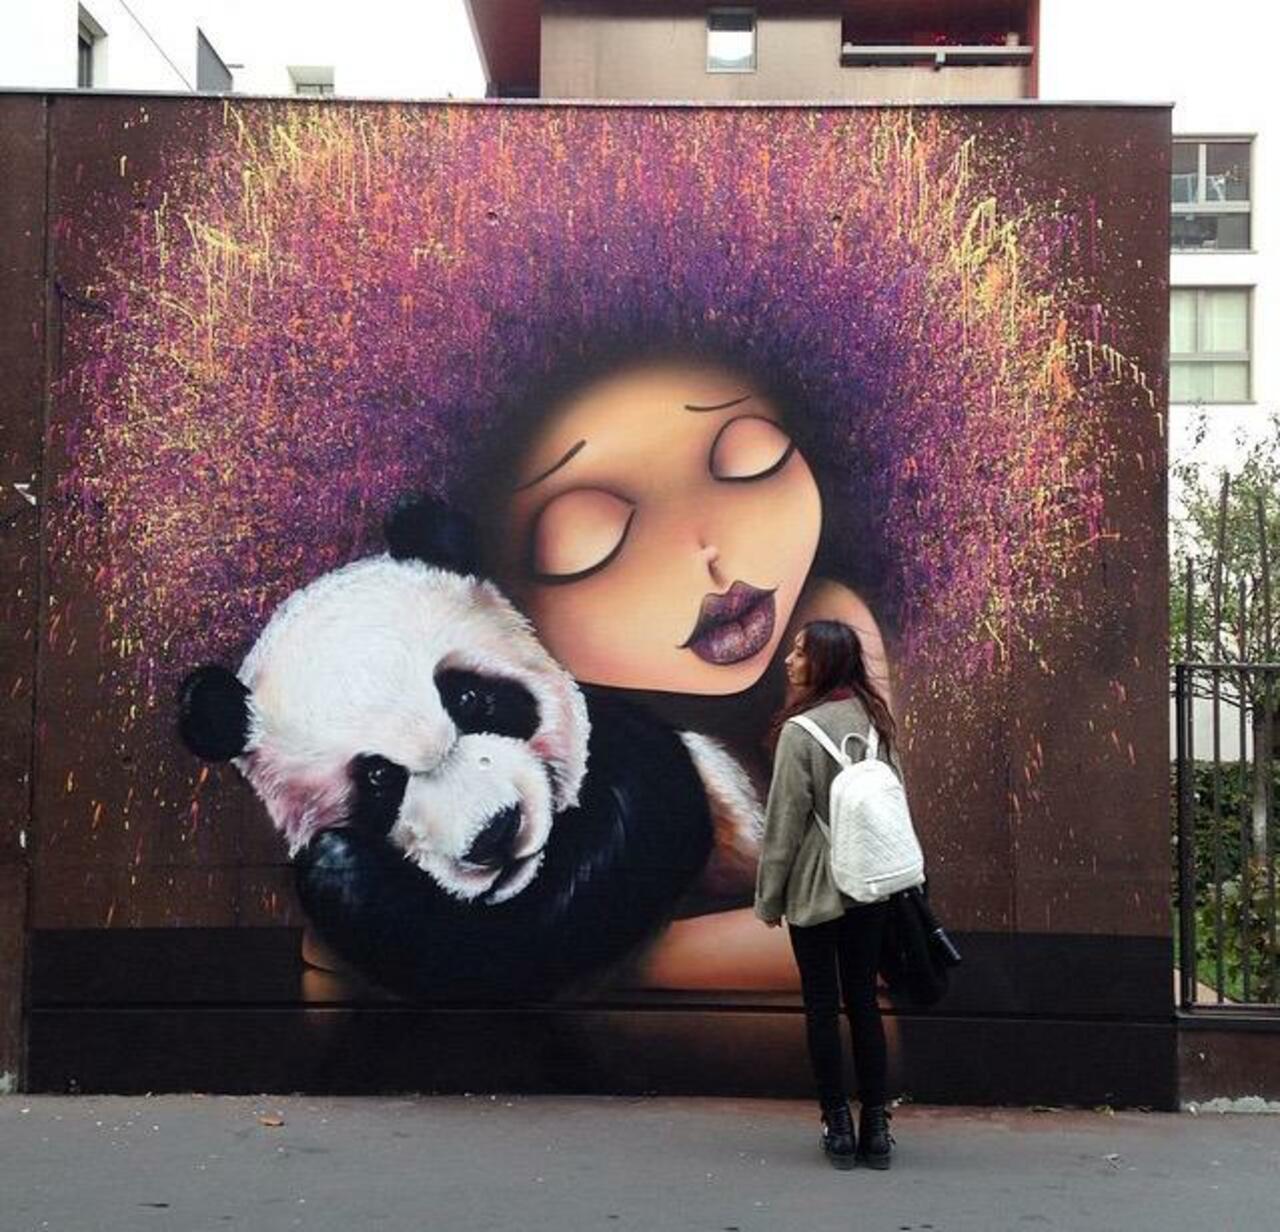 Street Art by VinieGraffiti in Paris 

#art #graffiti #mural #streetart http://t.co/YrOSW2cDBO